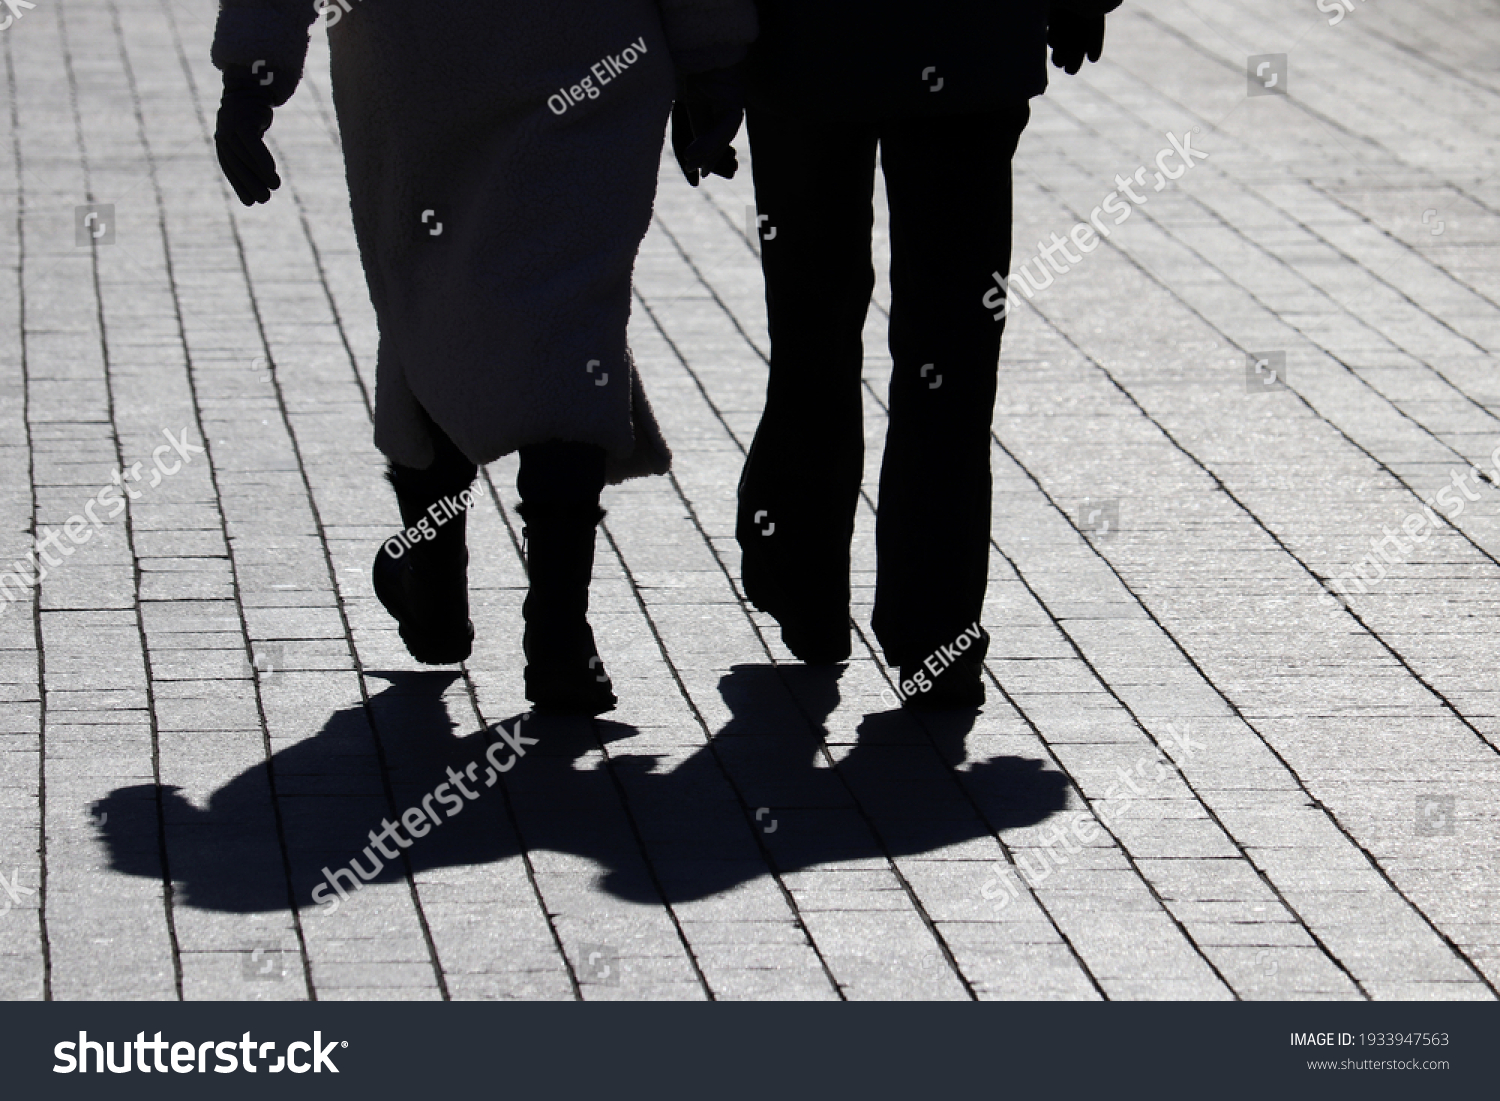 two people walking in the street